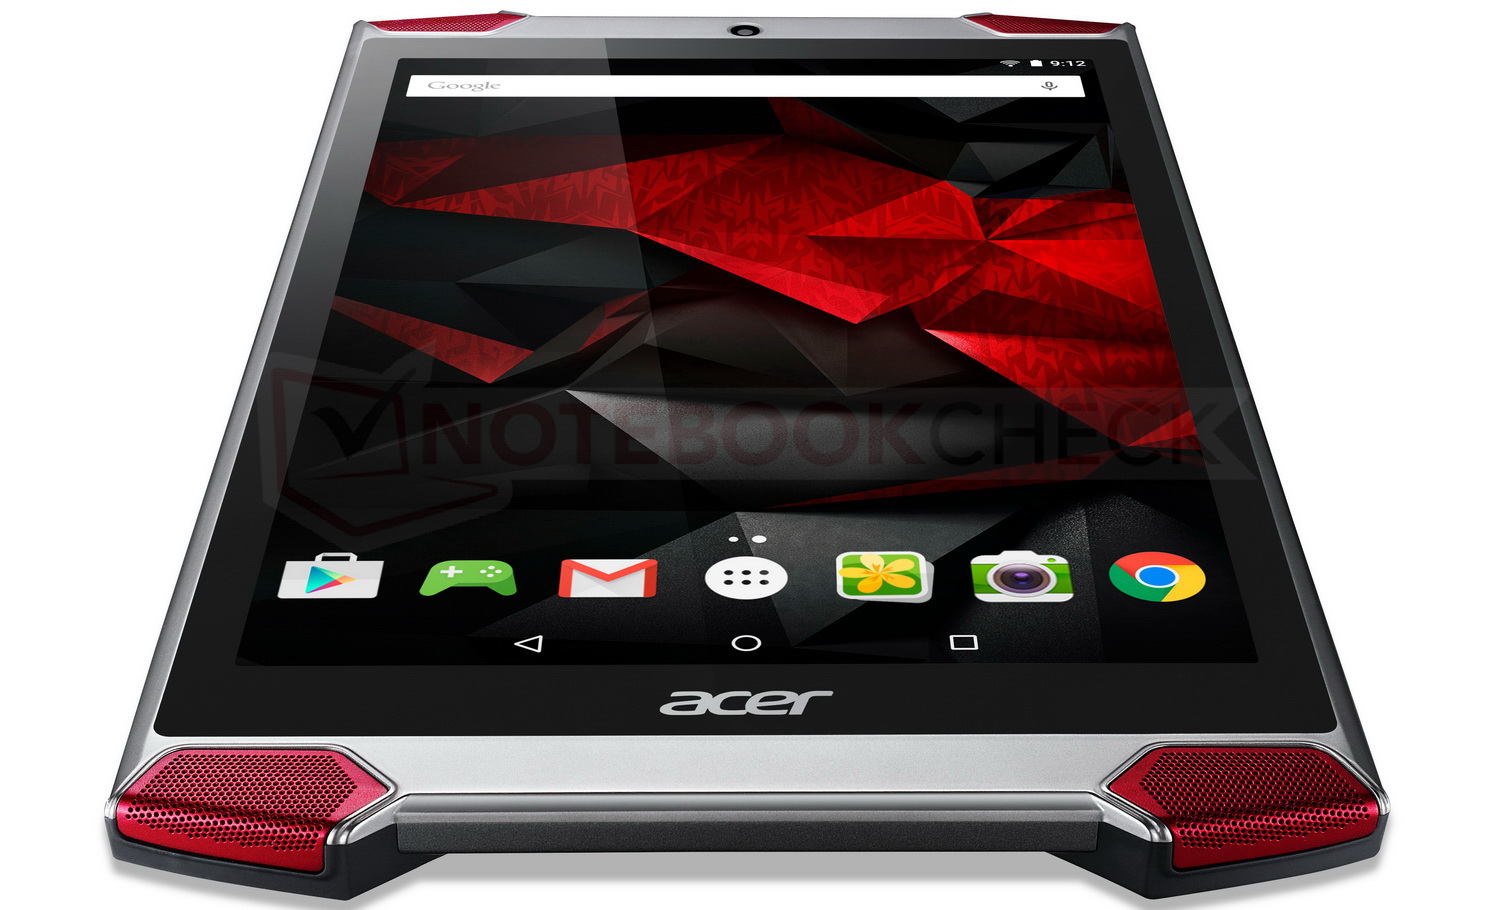 Pre-order Acer's Predator 8 gaming tablet for $300 - Liliputing